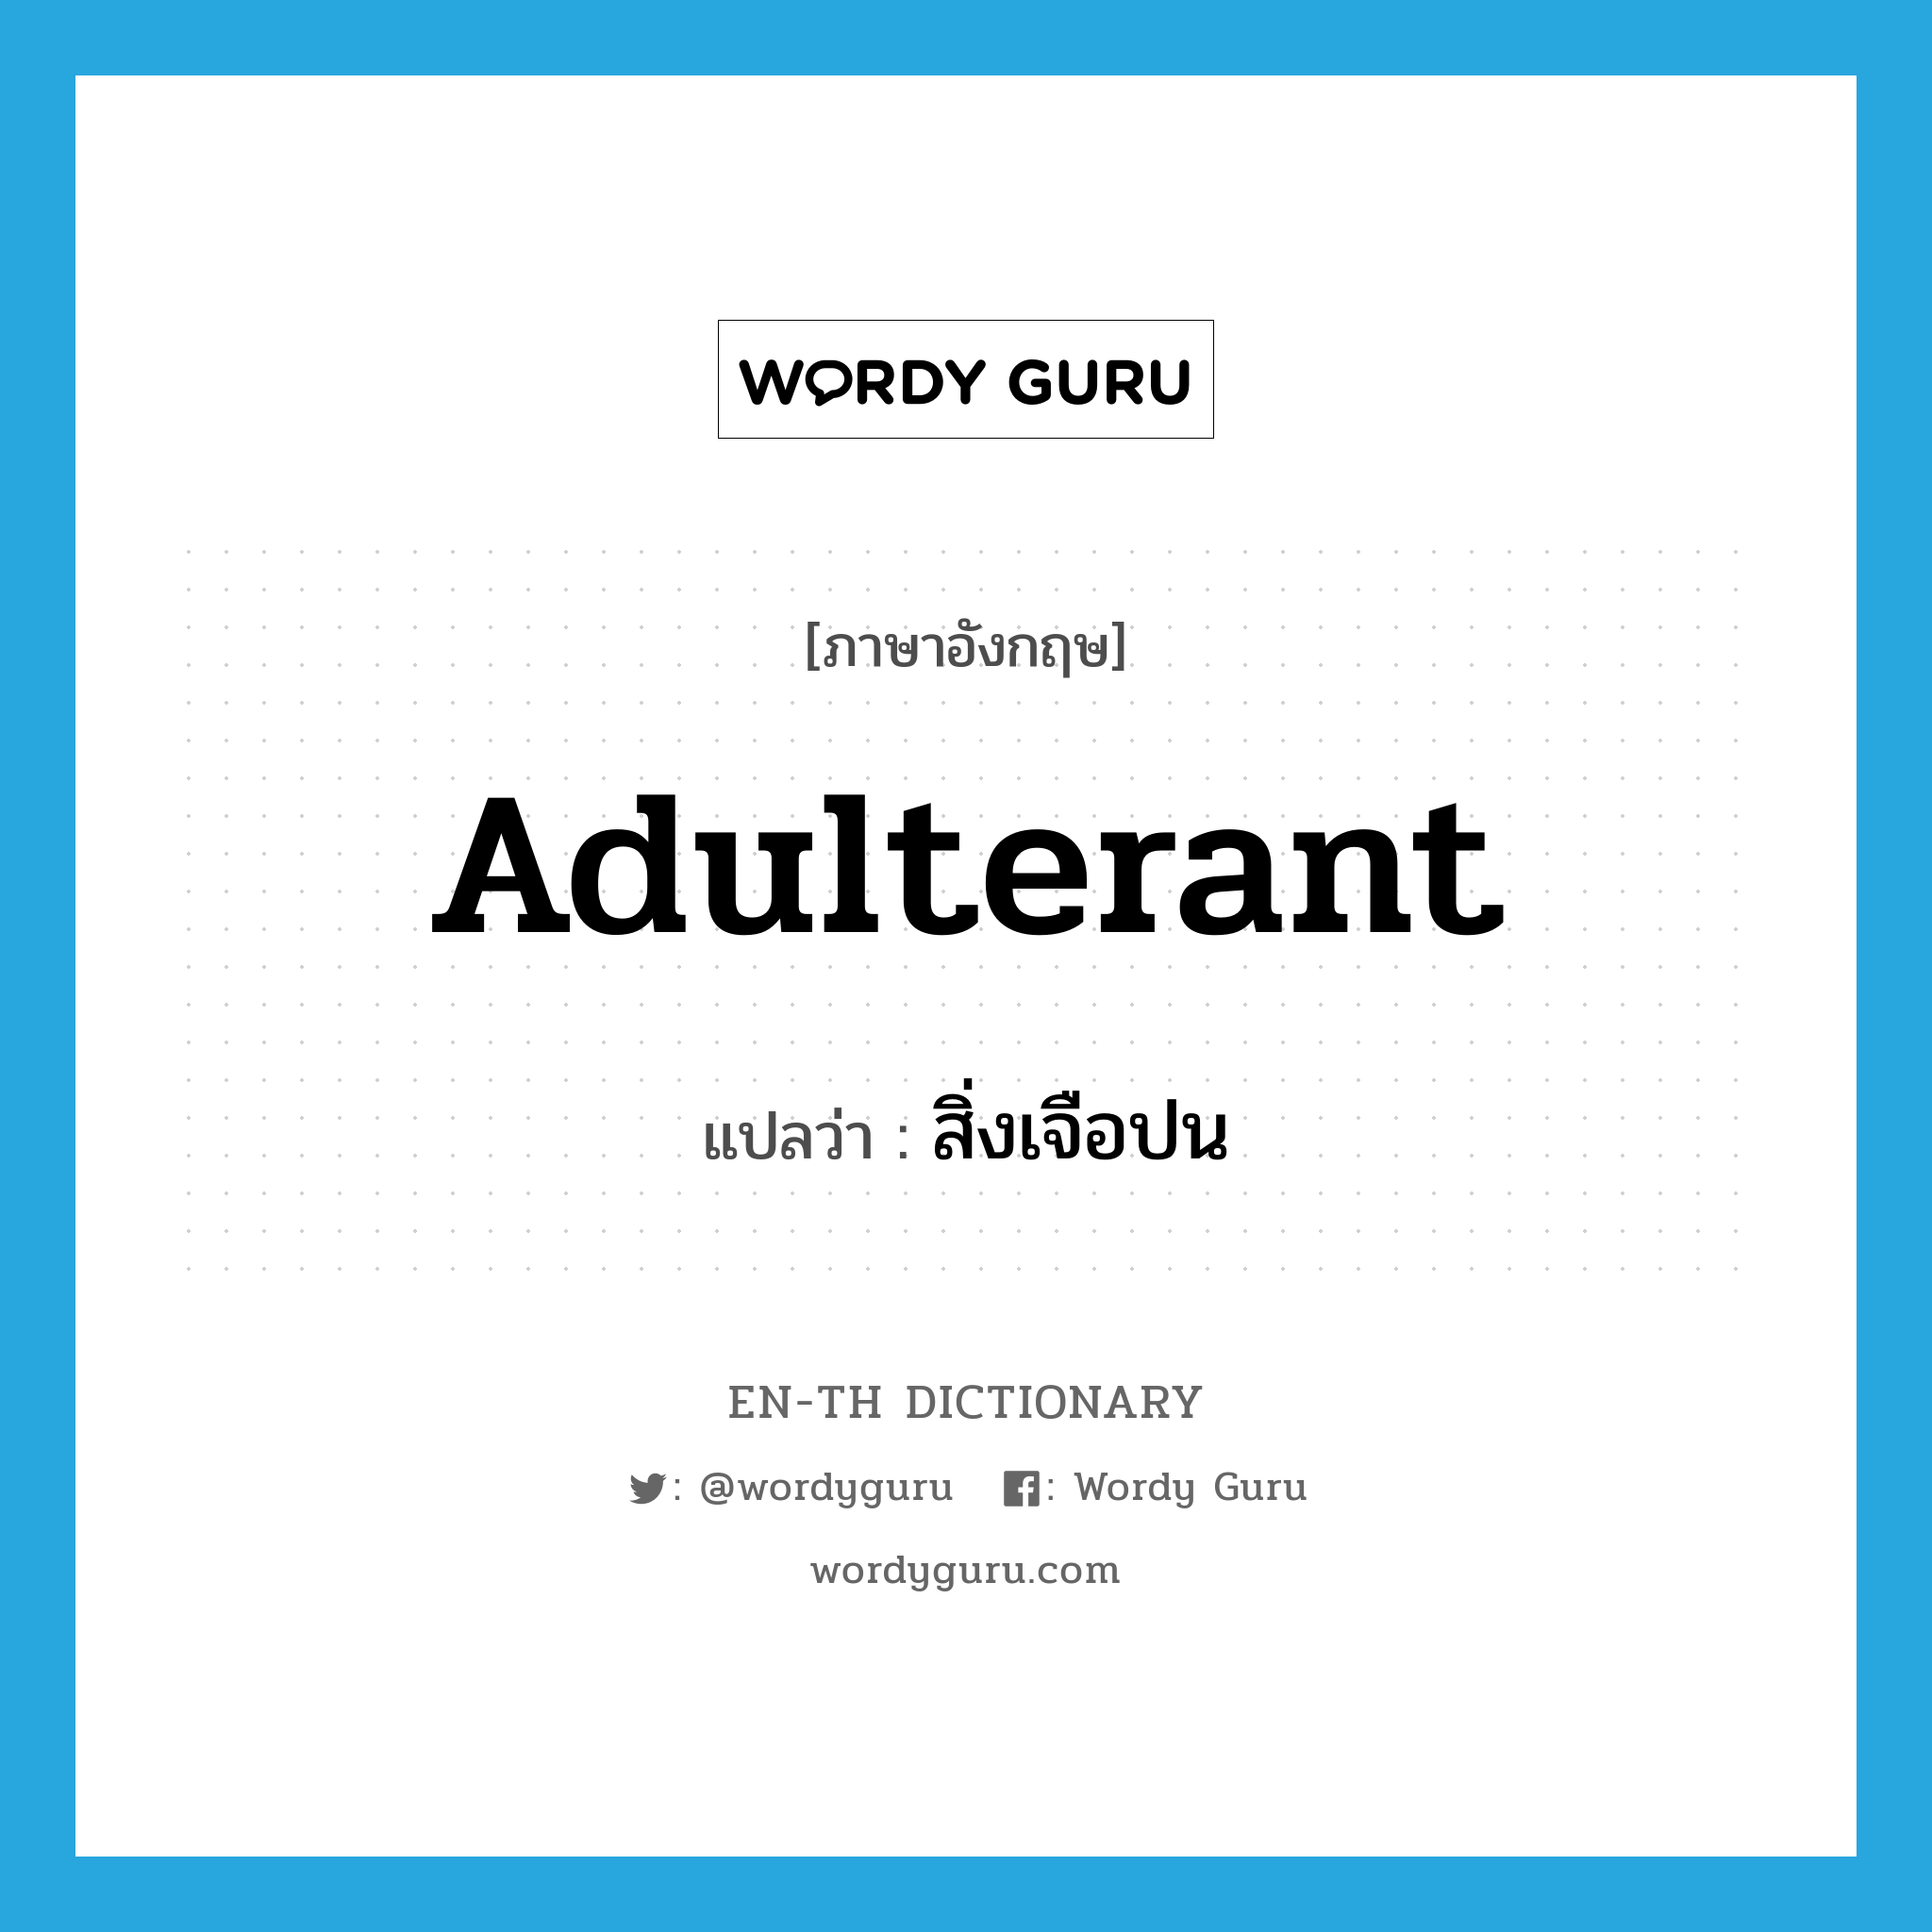 adulterant